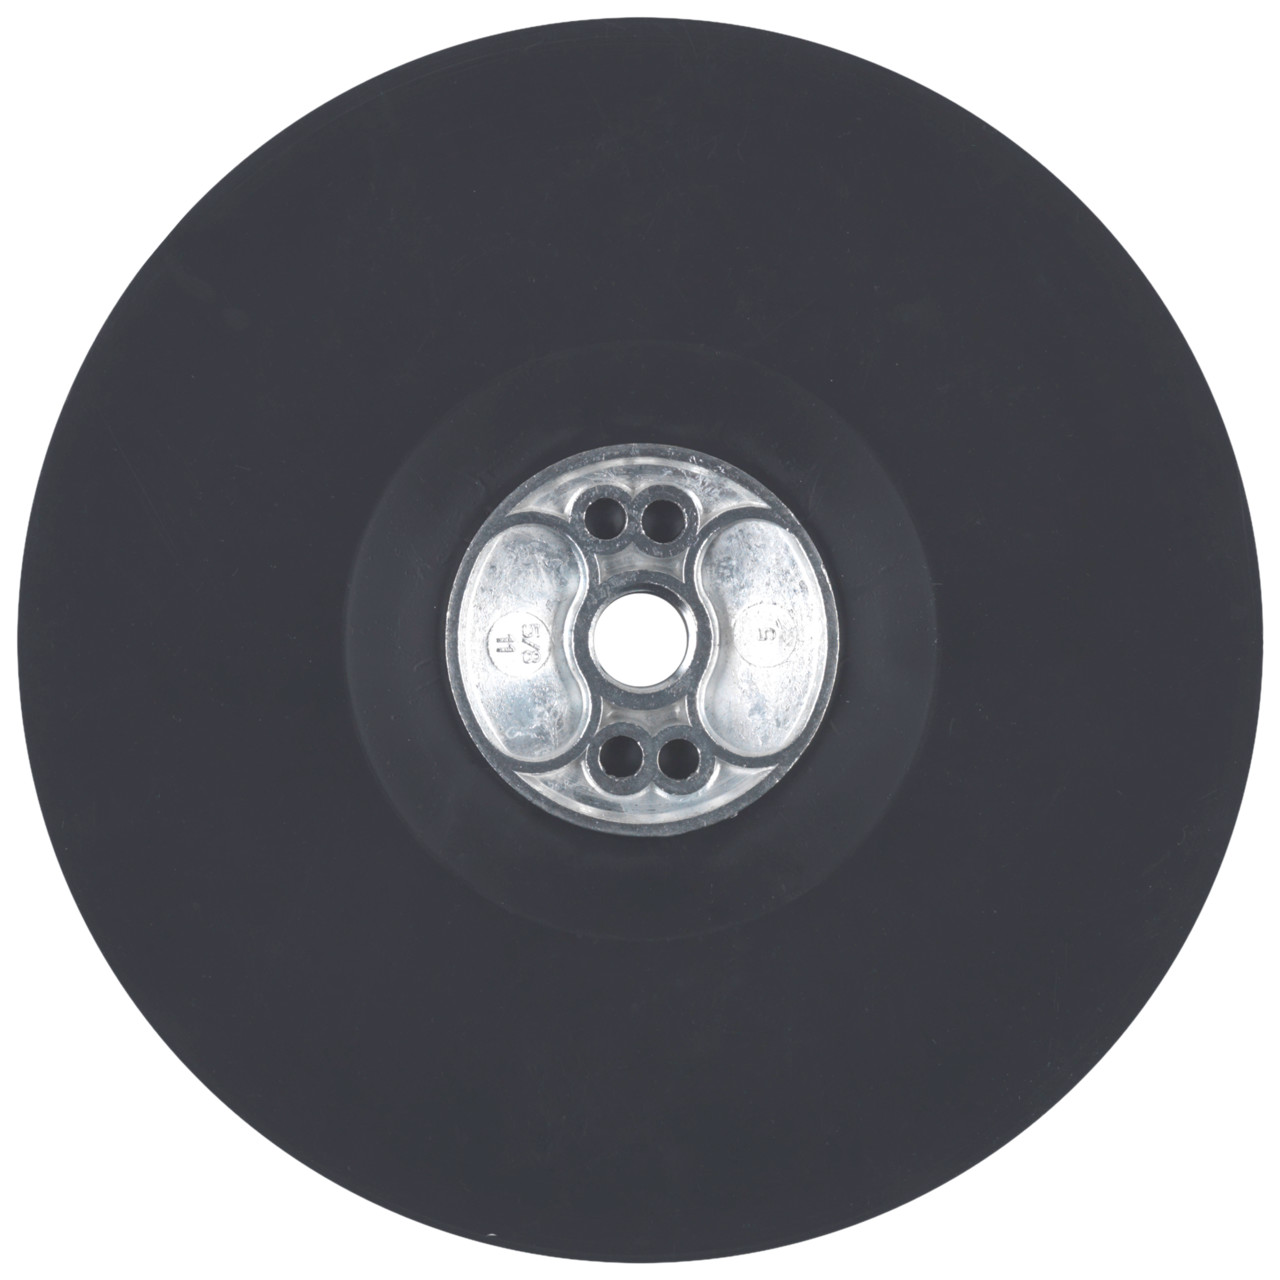 Accessori Tyrolit DxH 115x22 Per disco in fibra, durezza: HARD, forma: PAD, Art. 709999